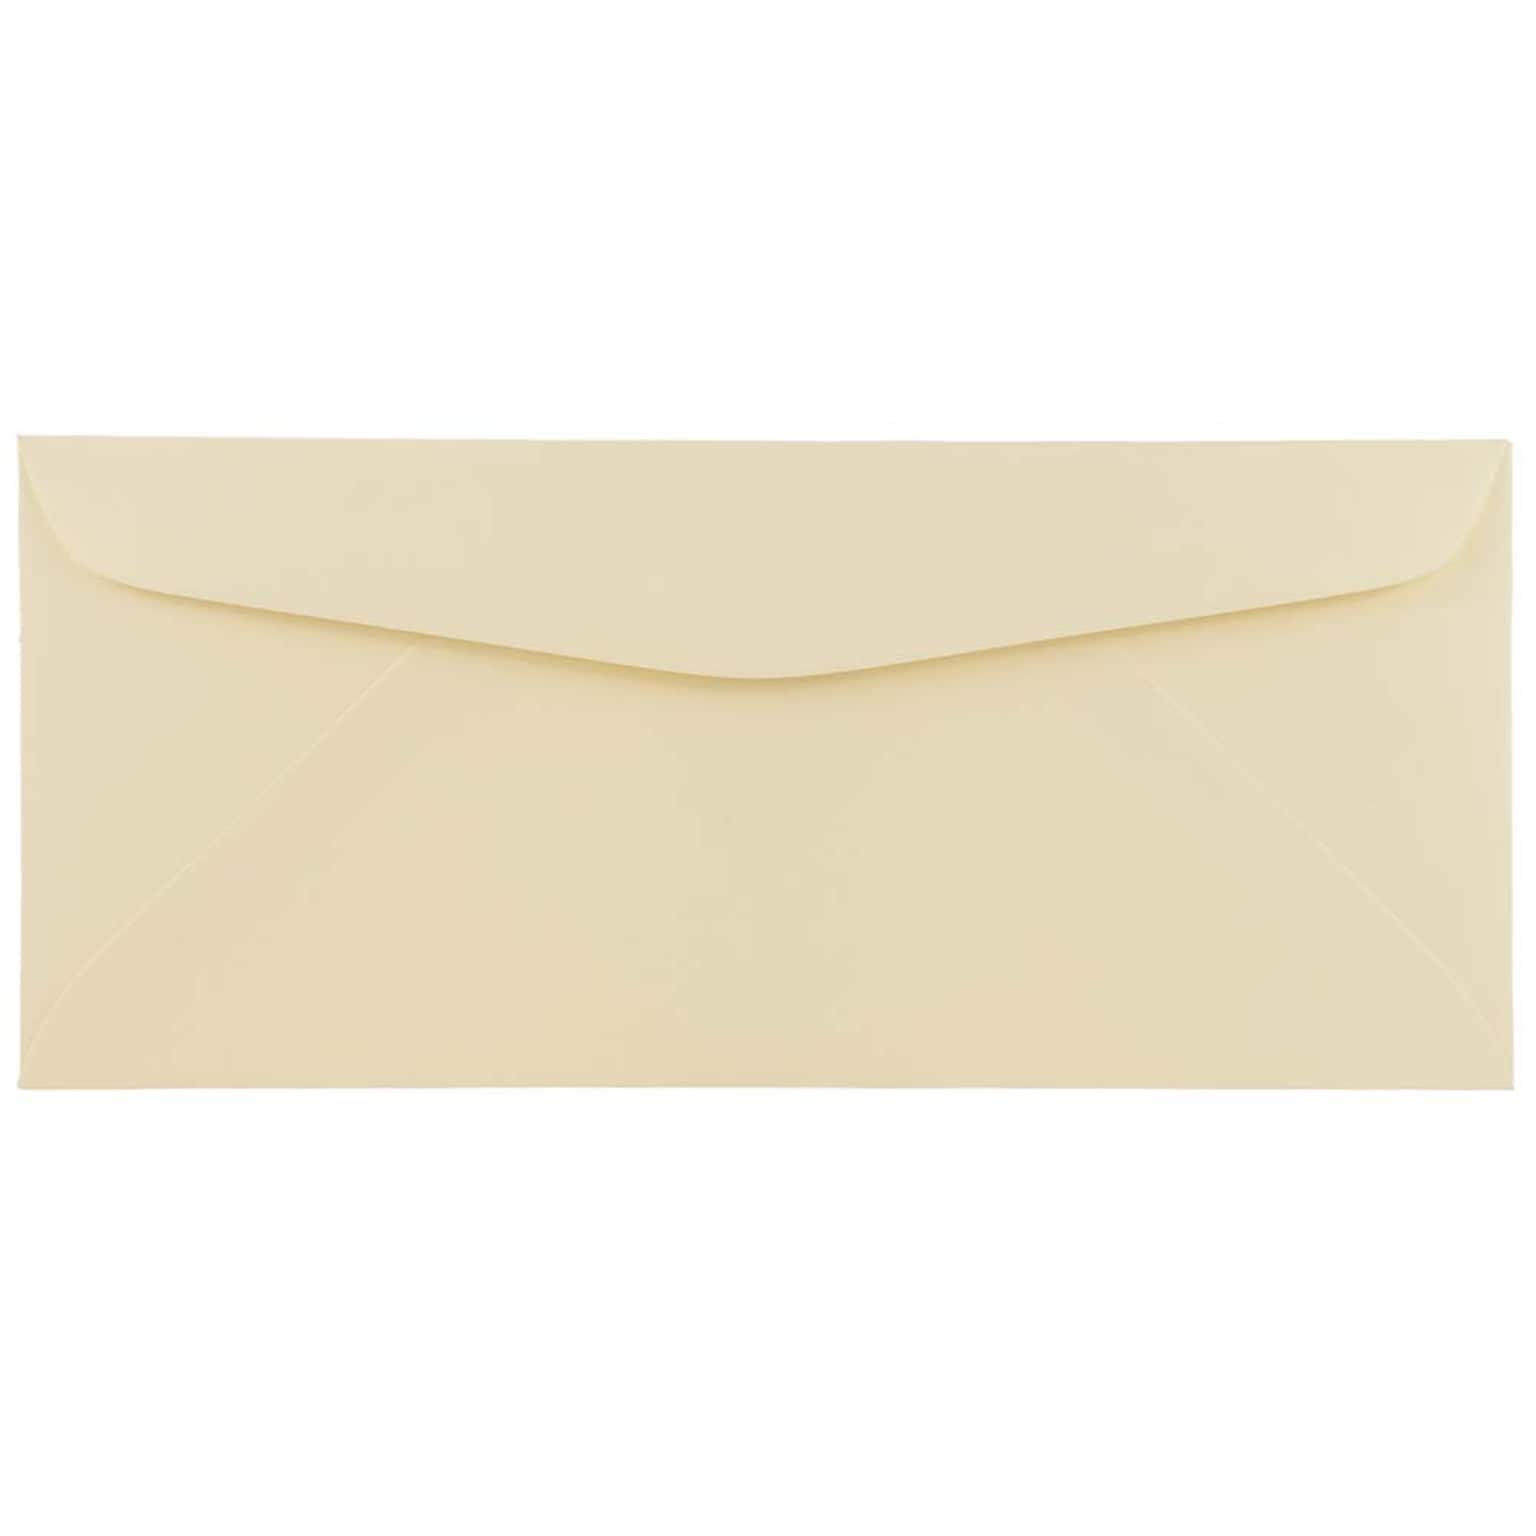 JAM Paper #10 Business Envelope, 4 1/8 x 9 1/2, Ivory, 1000/Pack (24311439)